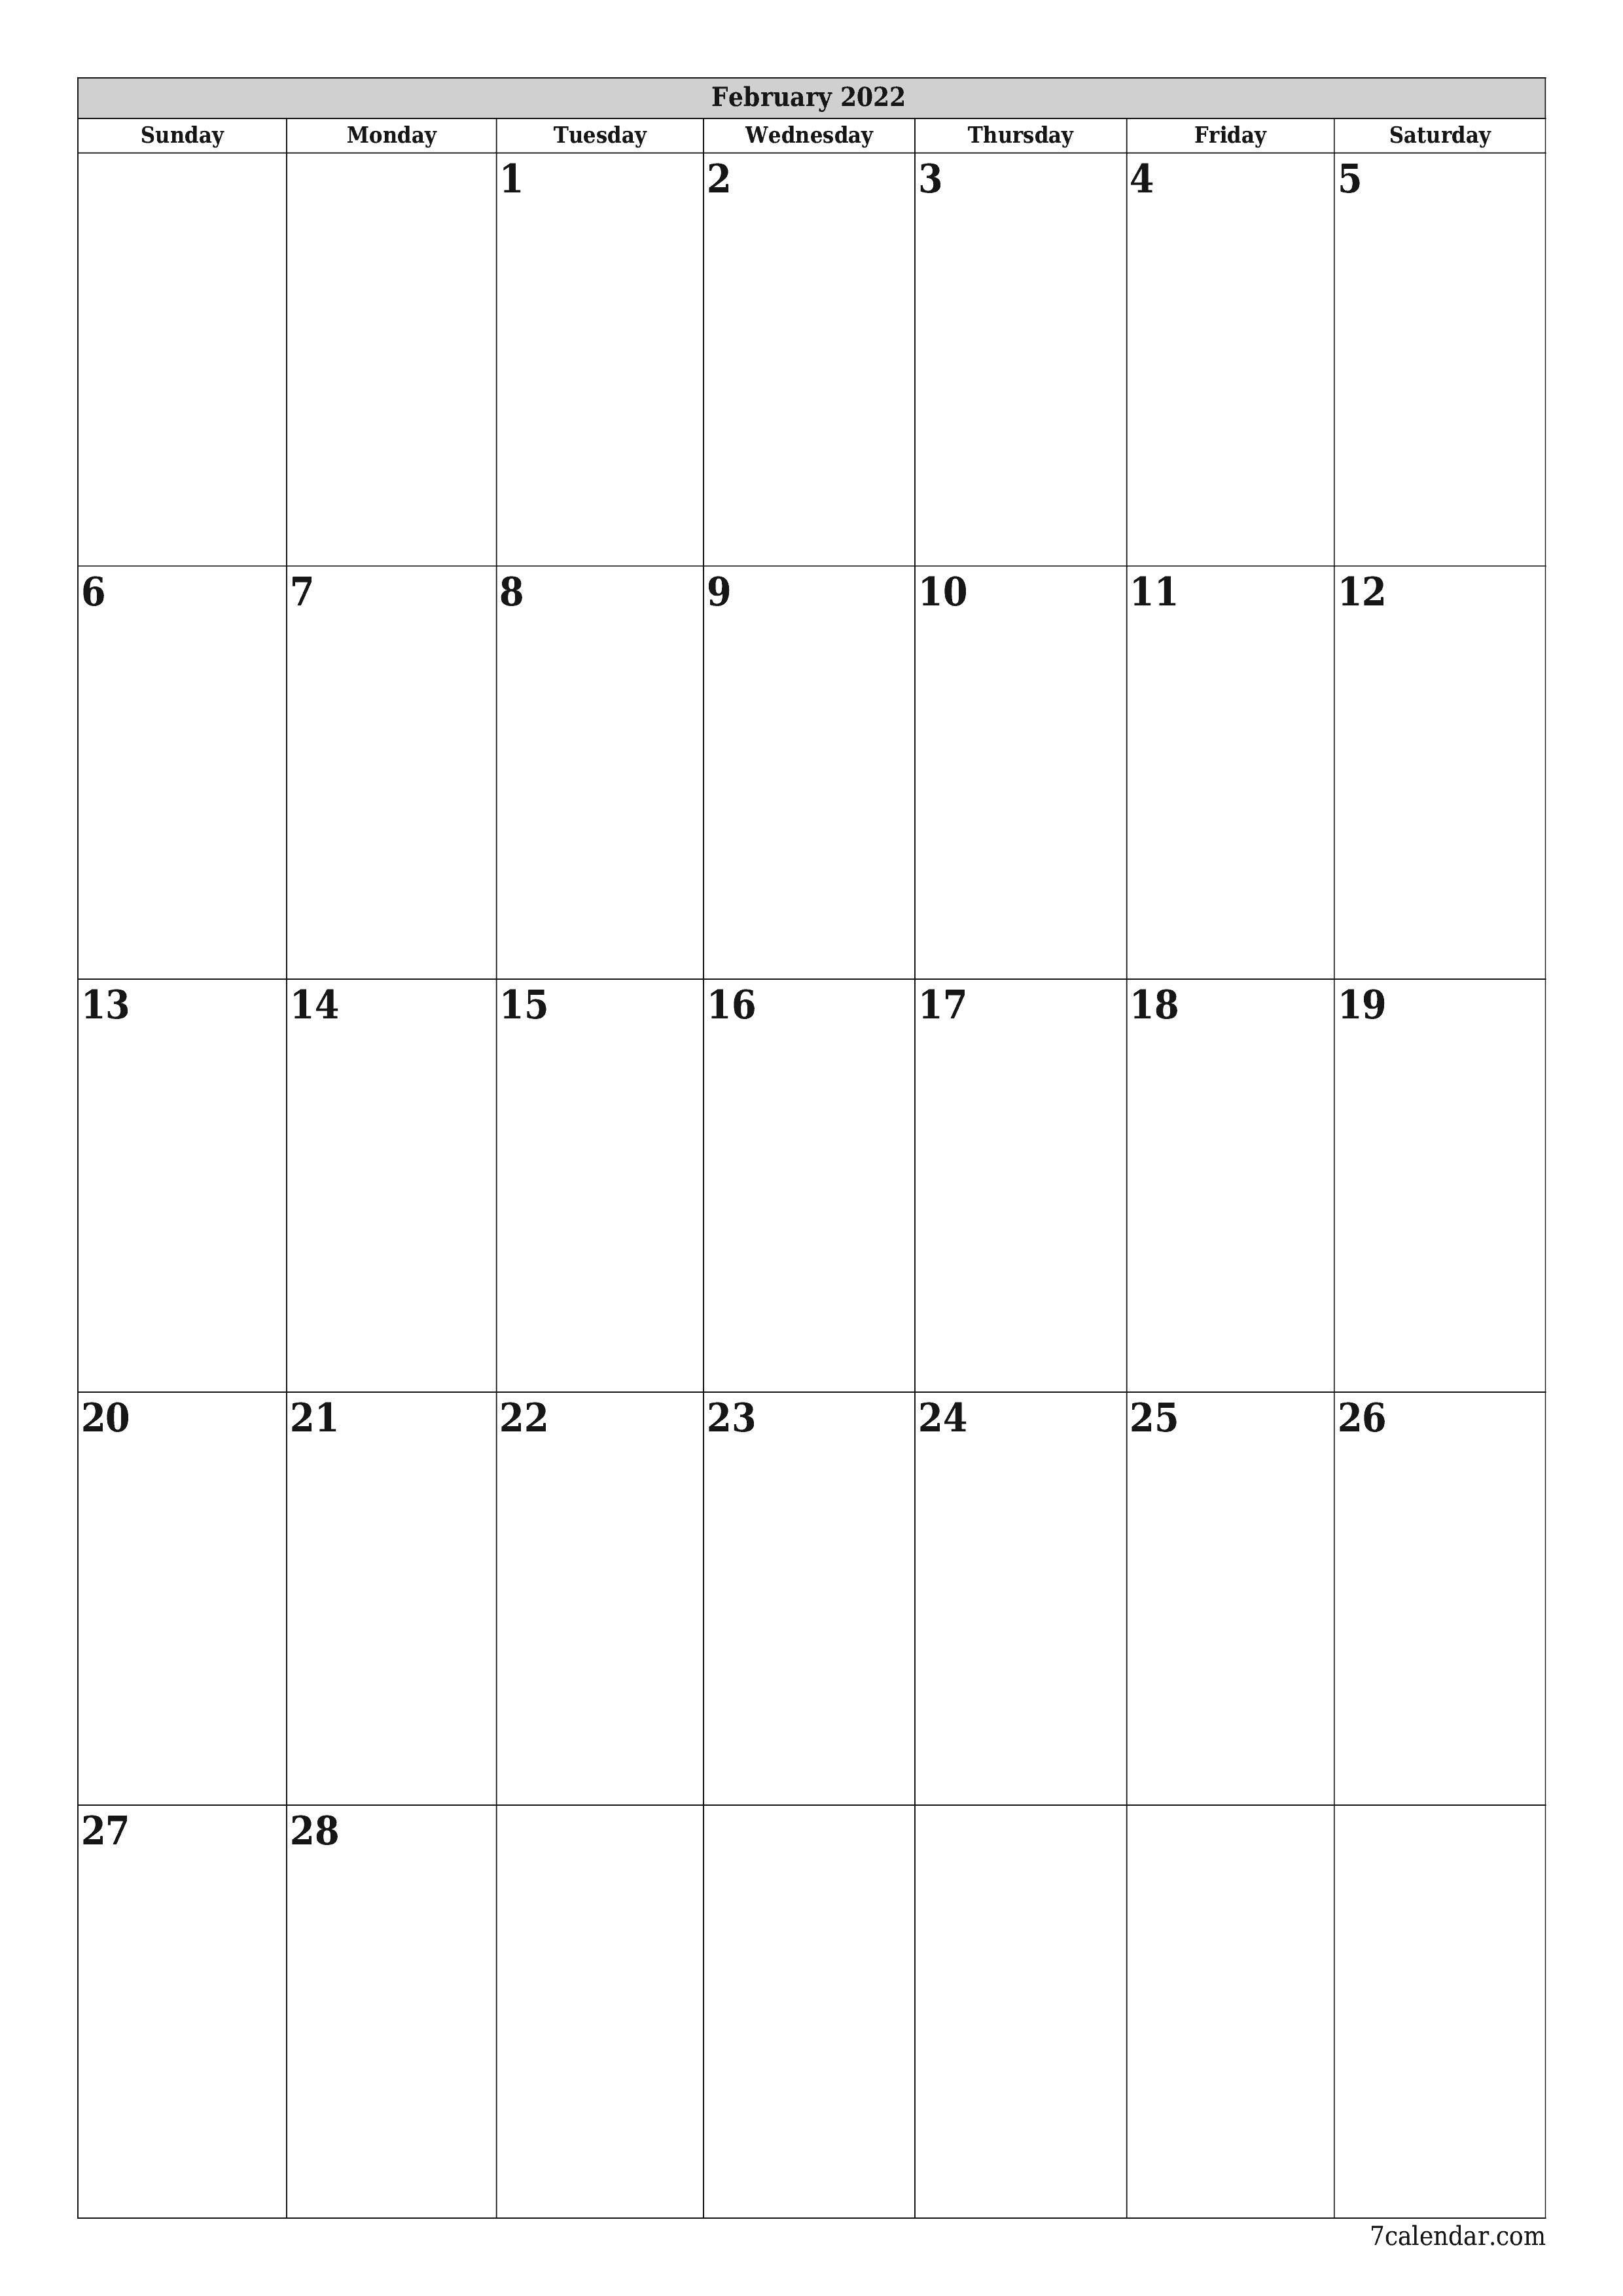 Blank calendar February 2022